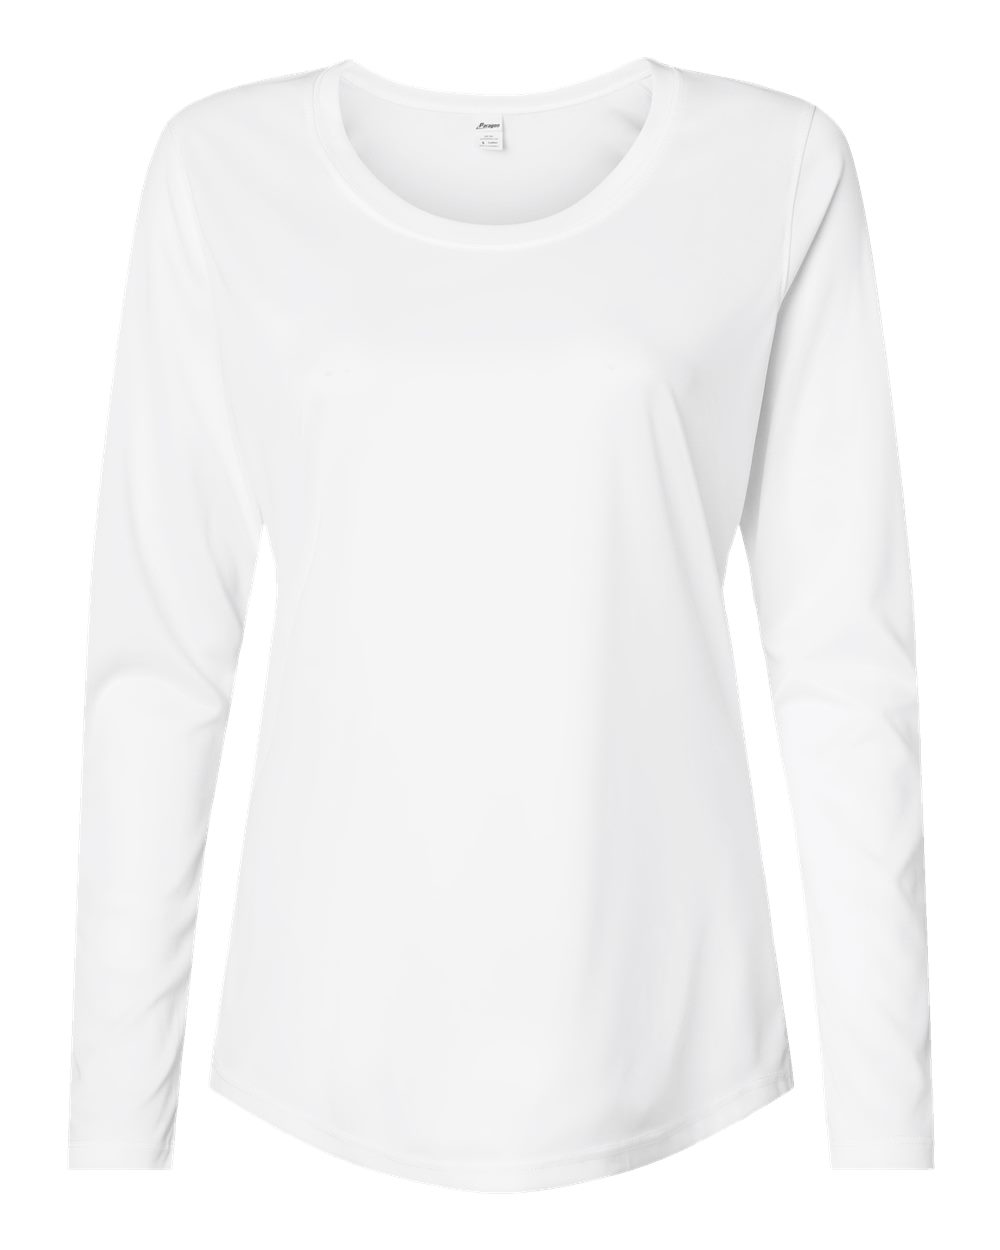 Paragon 214 - Women's Long Islander Performance Long Sleeve T-Shirt